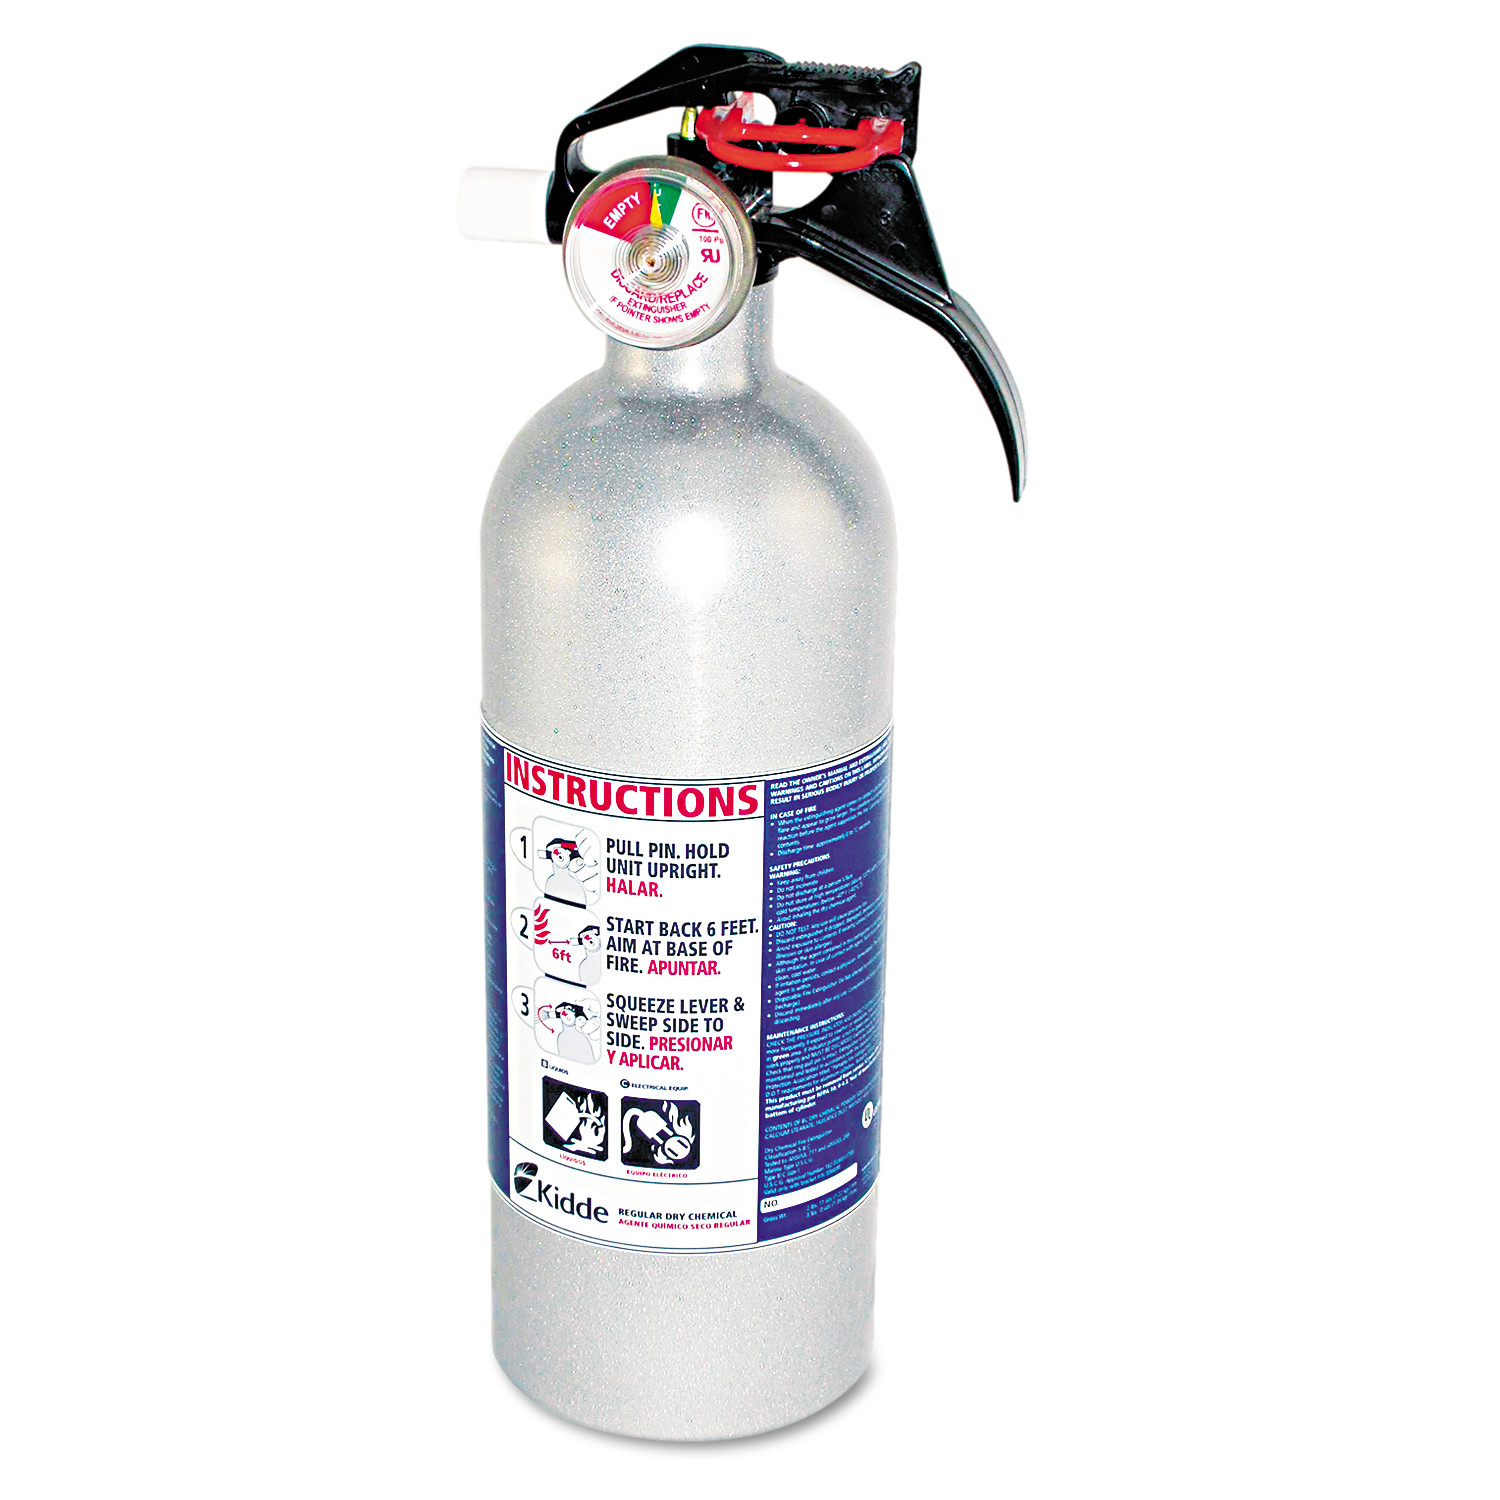 Kidde Auto Fire Extinguisher - image 1 of 5